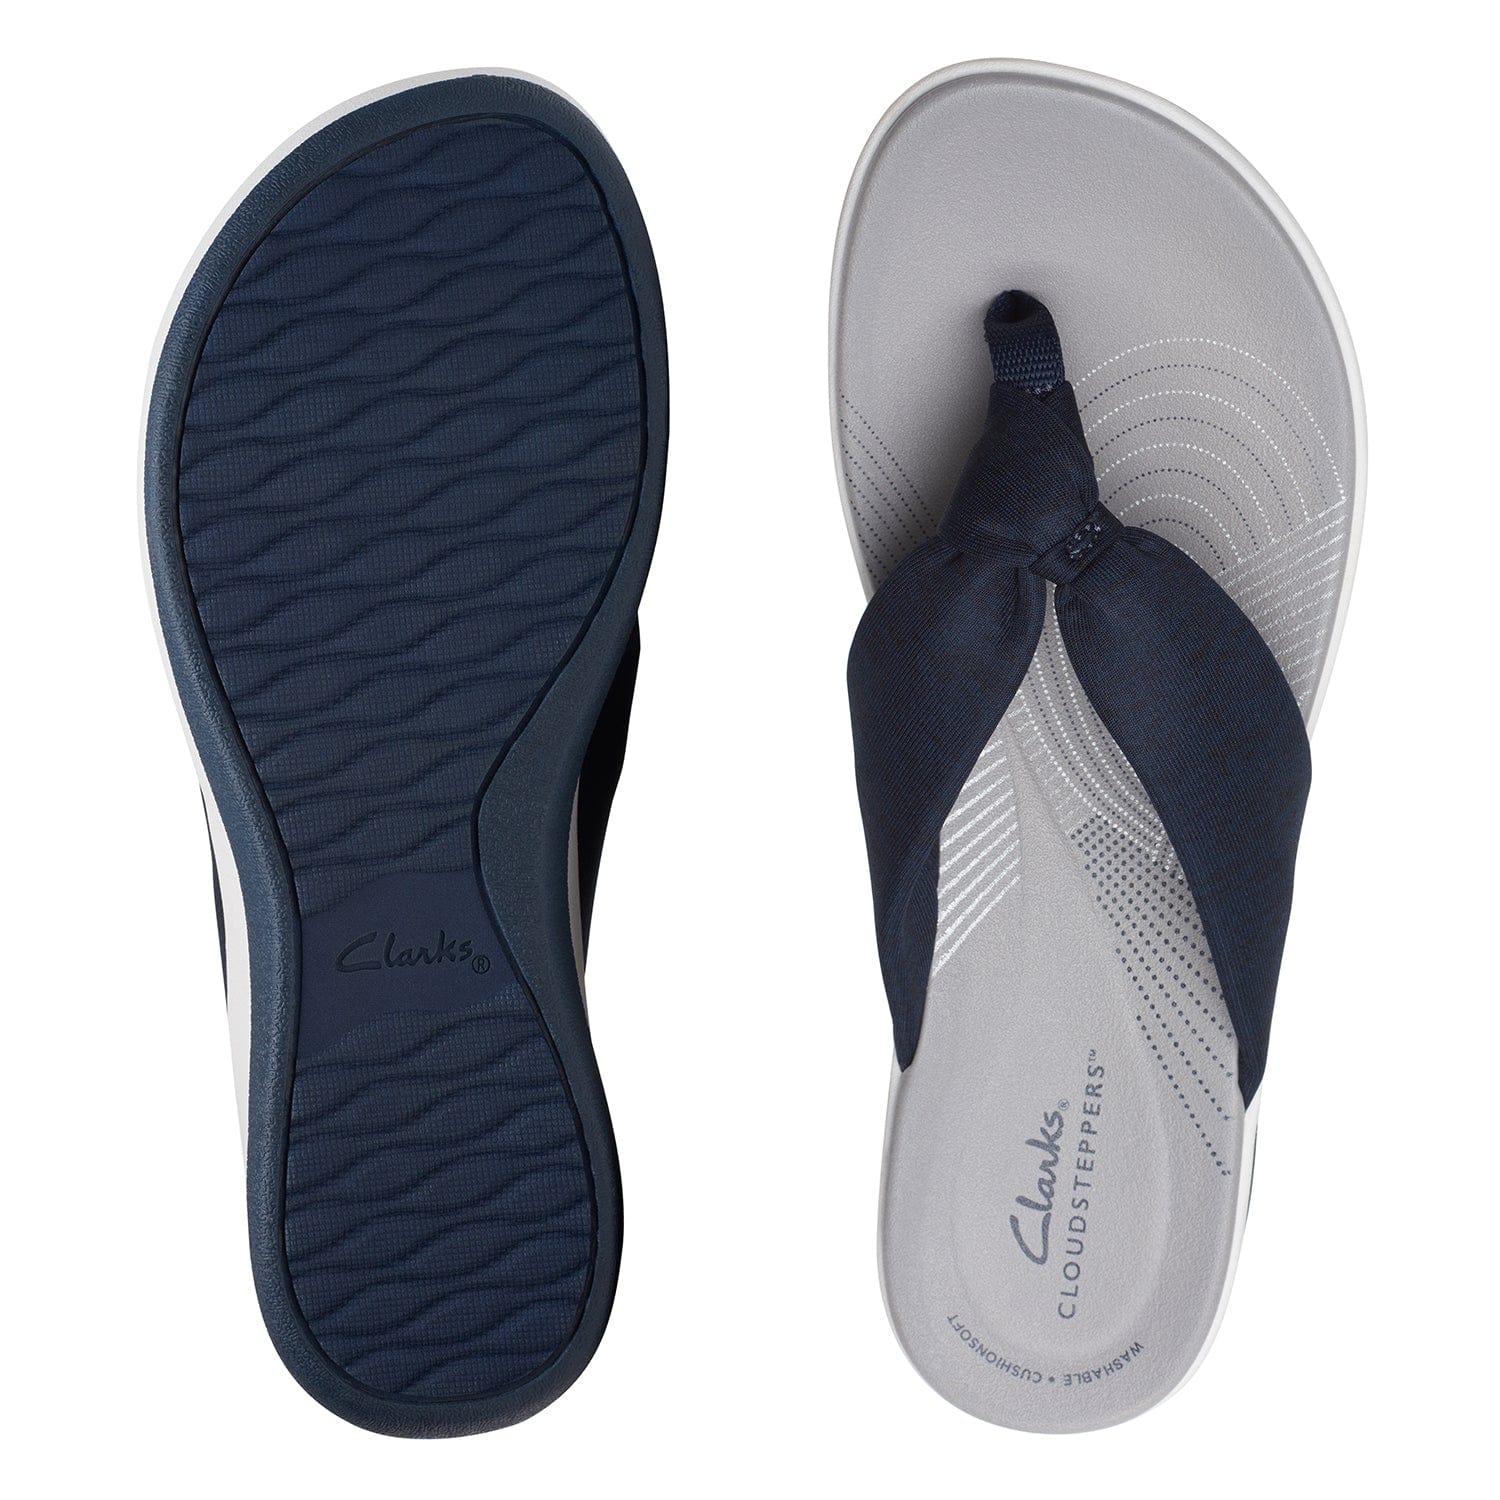 Clarks Arla Glison 2 - Sandals - Blue Fabric - 261752564 - D Width (Standard Fit)